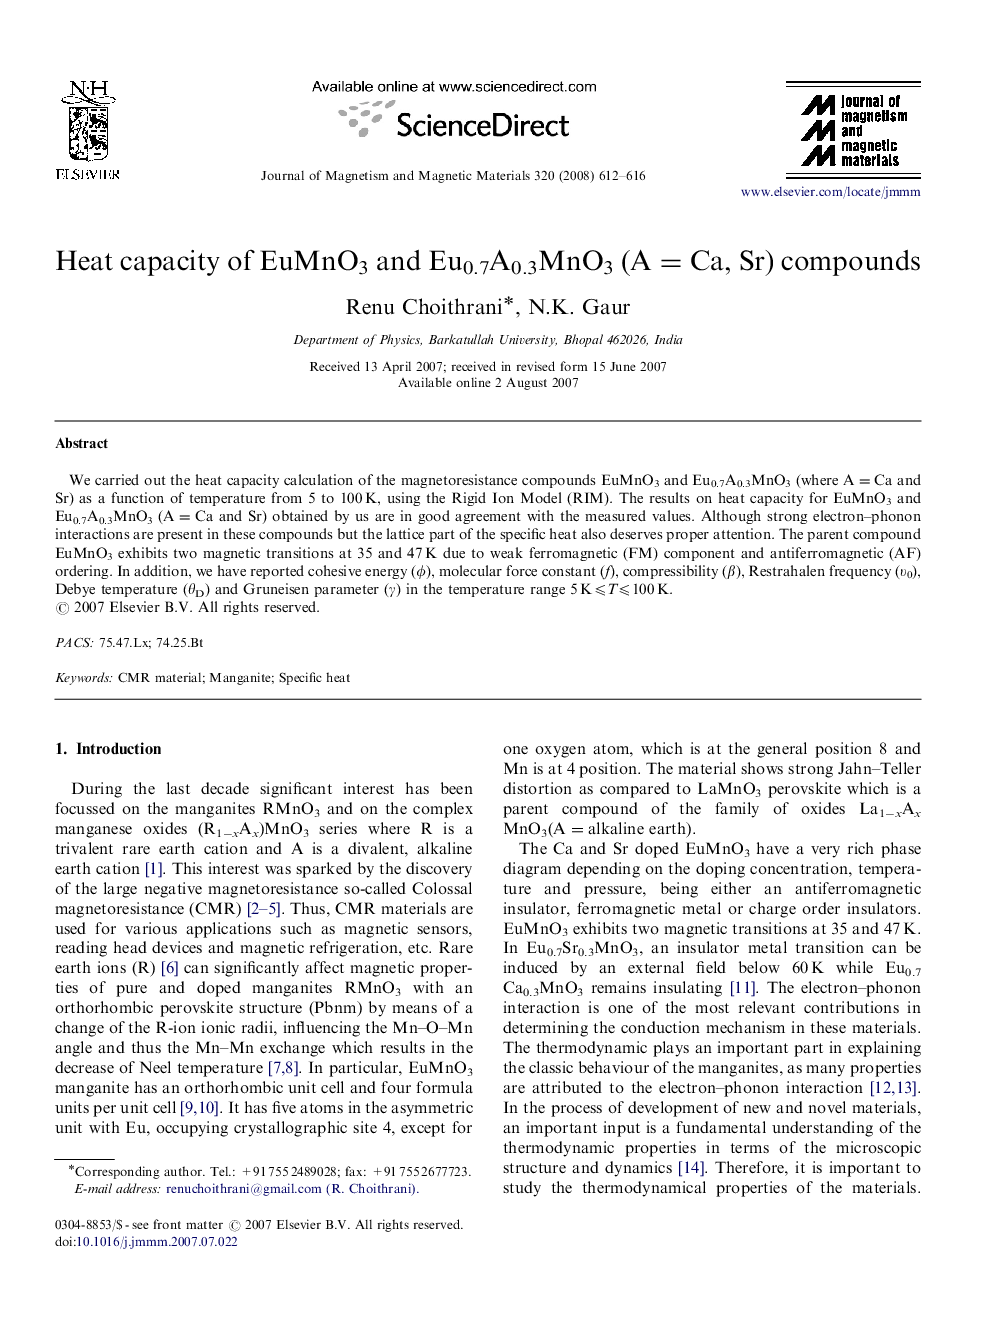 Heat capacity of EuMnO3 and Eu0.7A0.3MnO3 (A=Ca, Sr) compounds